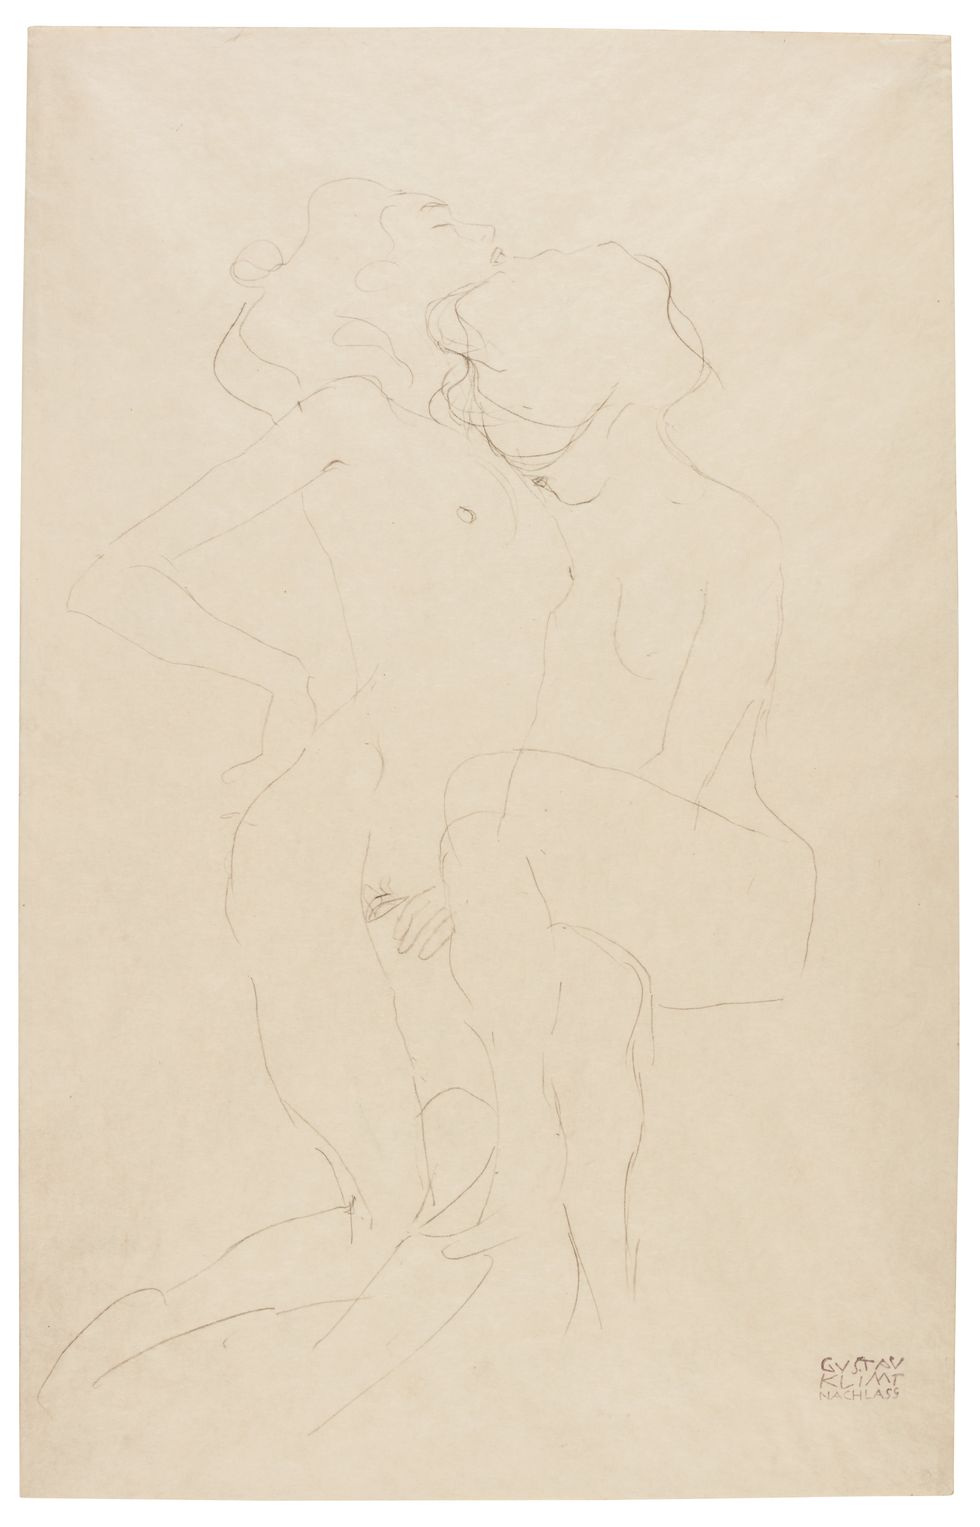 Gustav Klimt, Freundinnen (Girlfriends), pencil on paper, 1913 (est. -ú50,000-70,000)